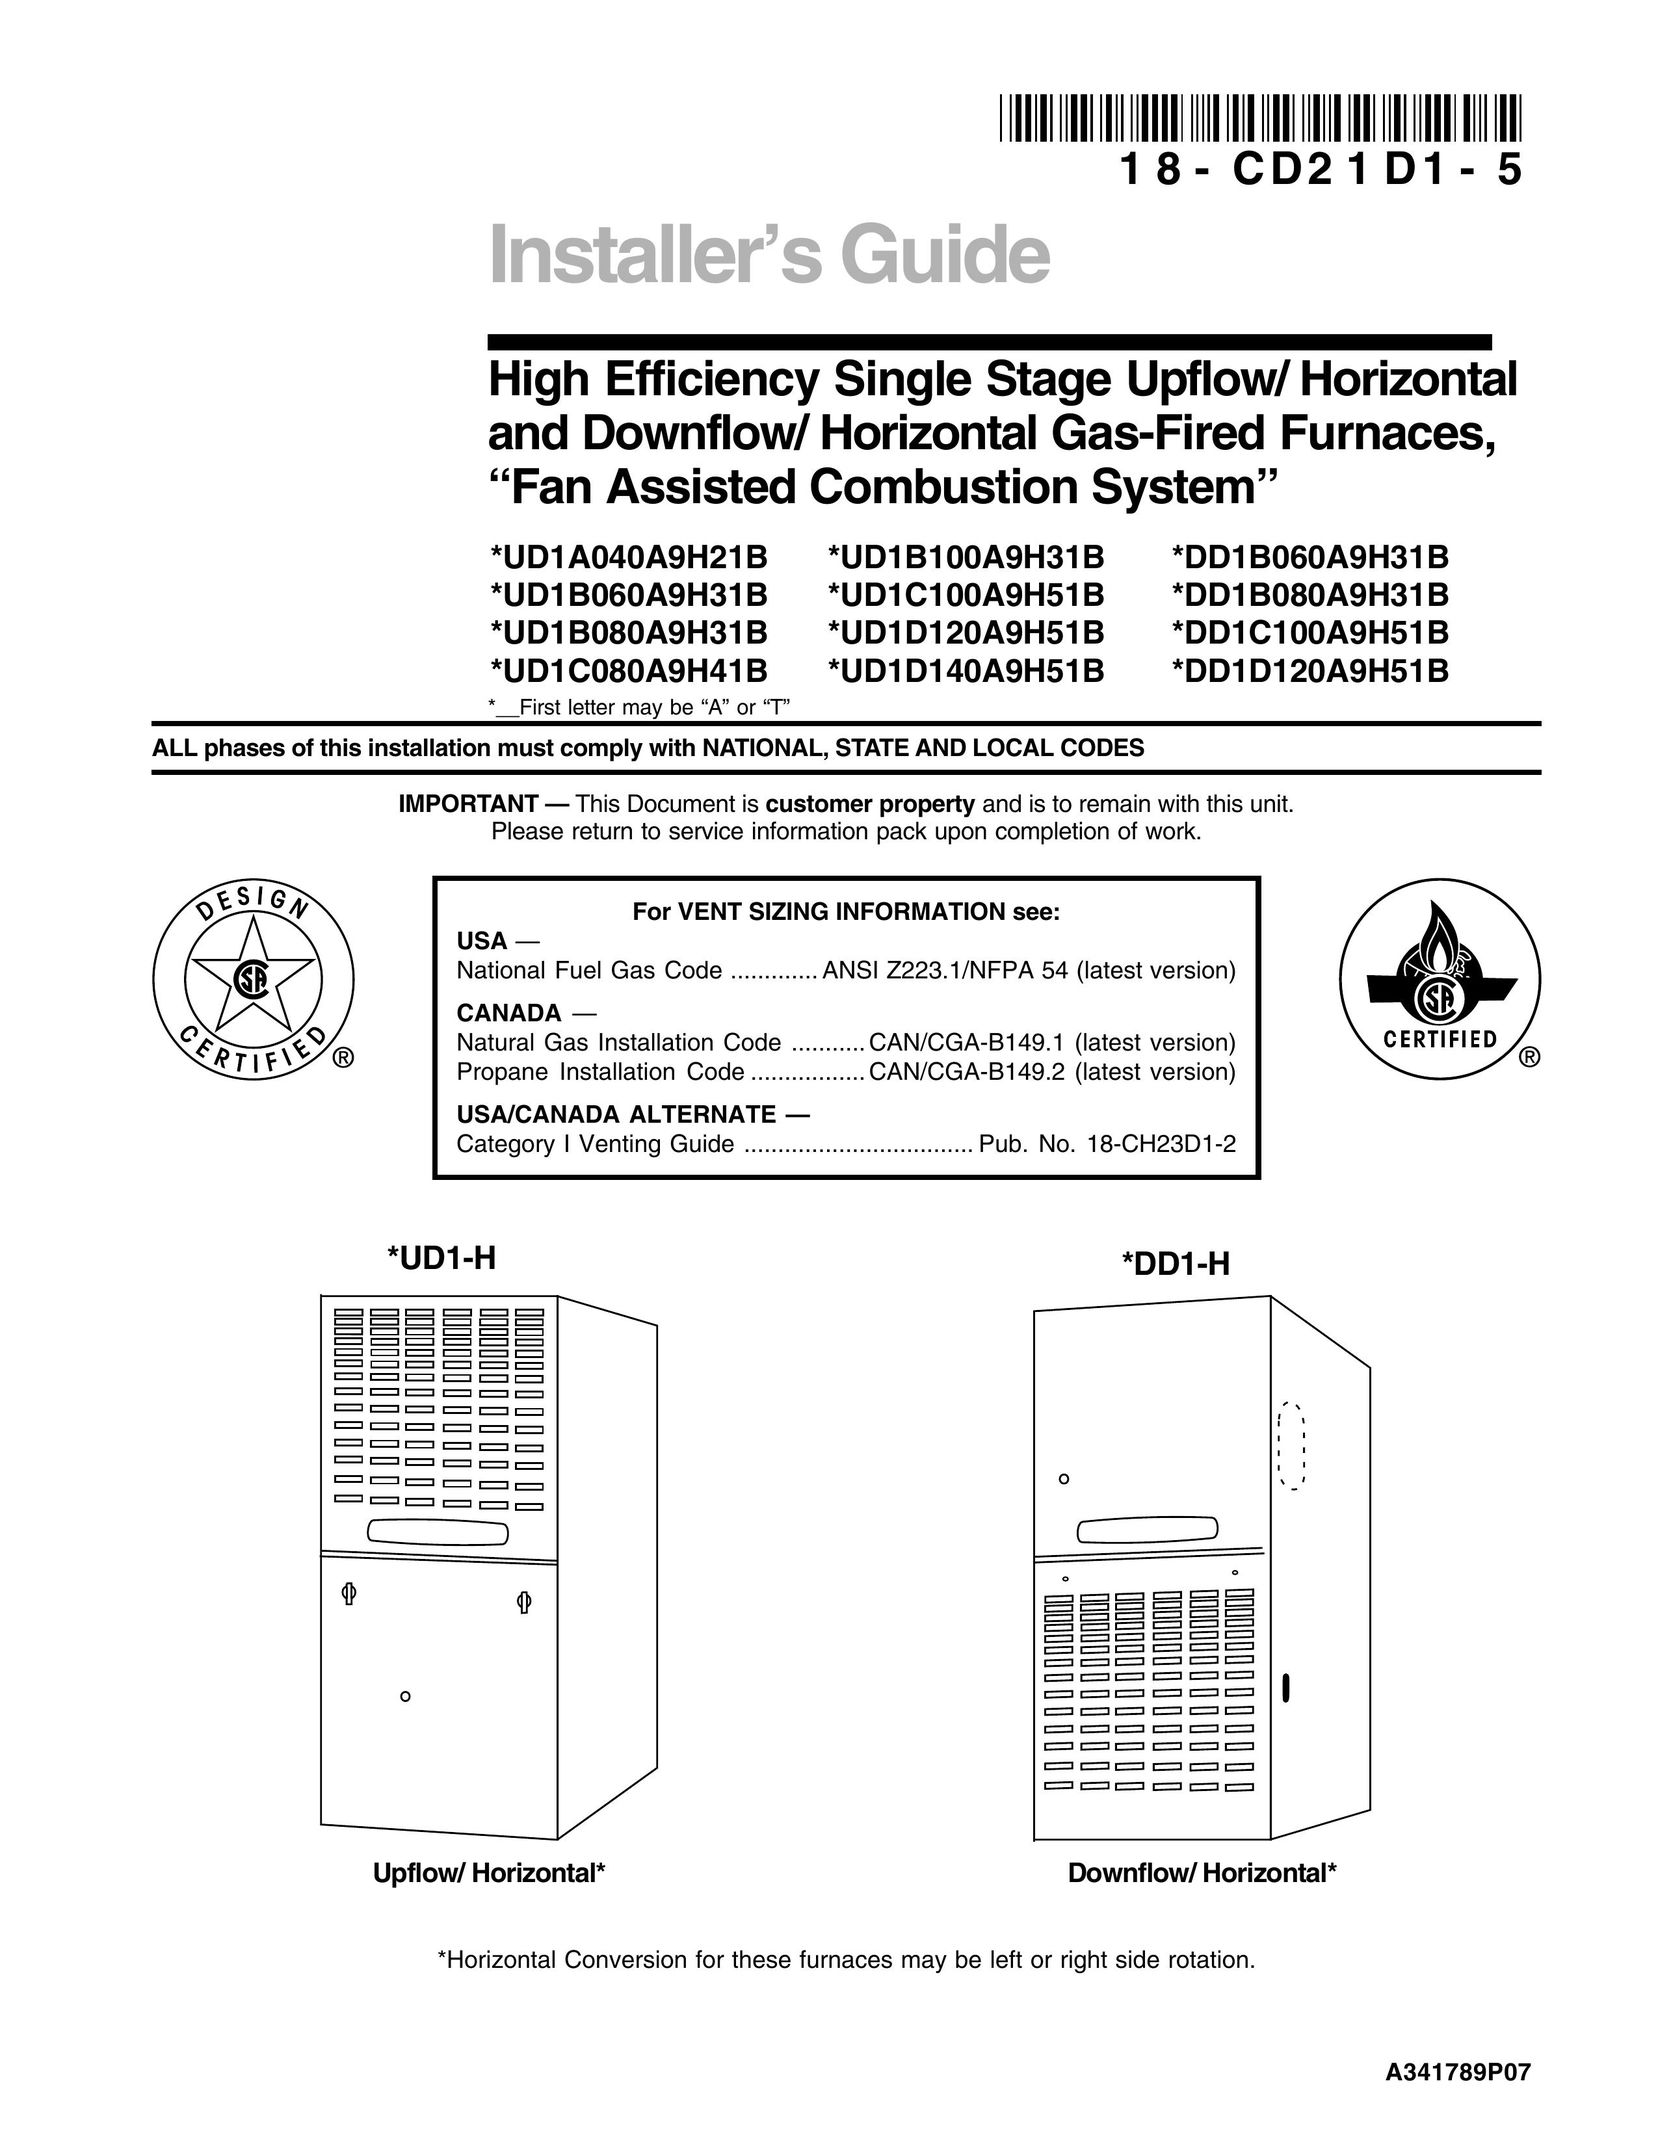 Trane UD1D140A9H51B Furnace User Manual